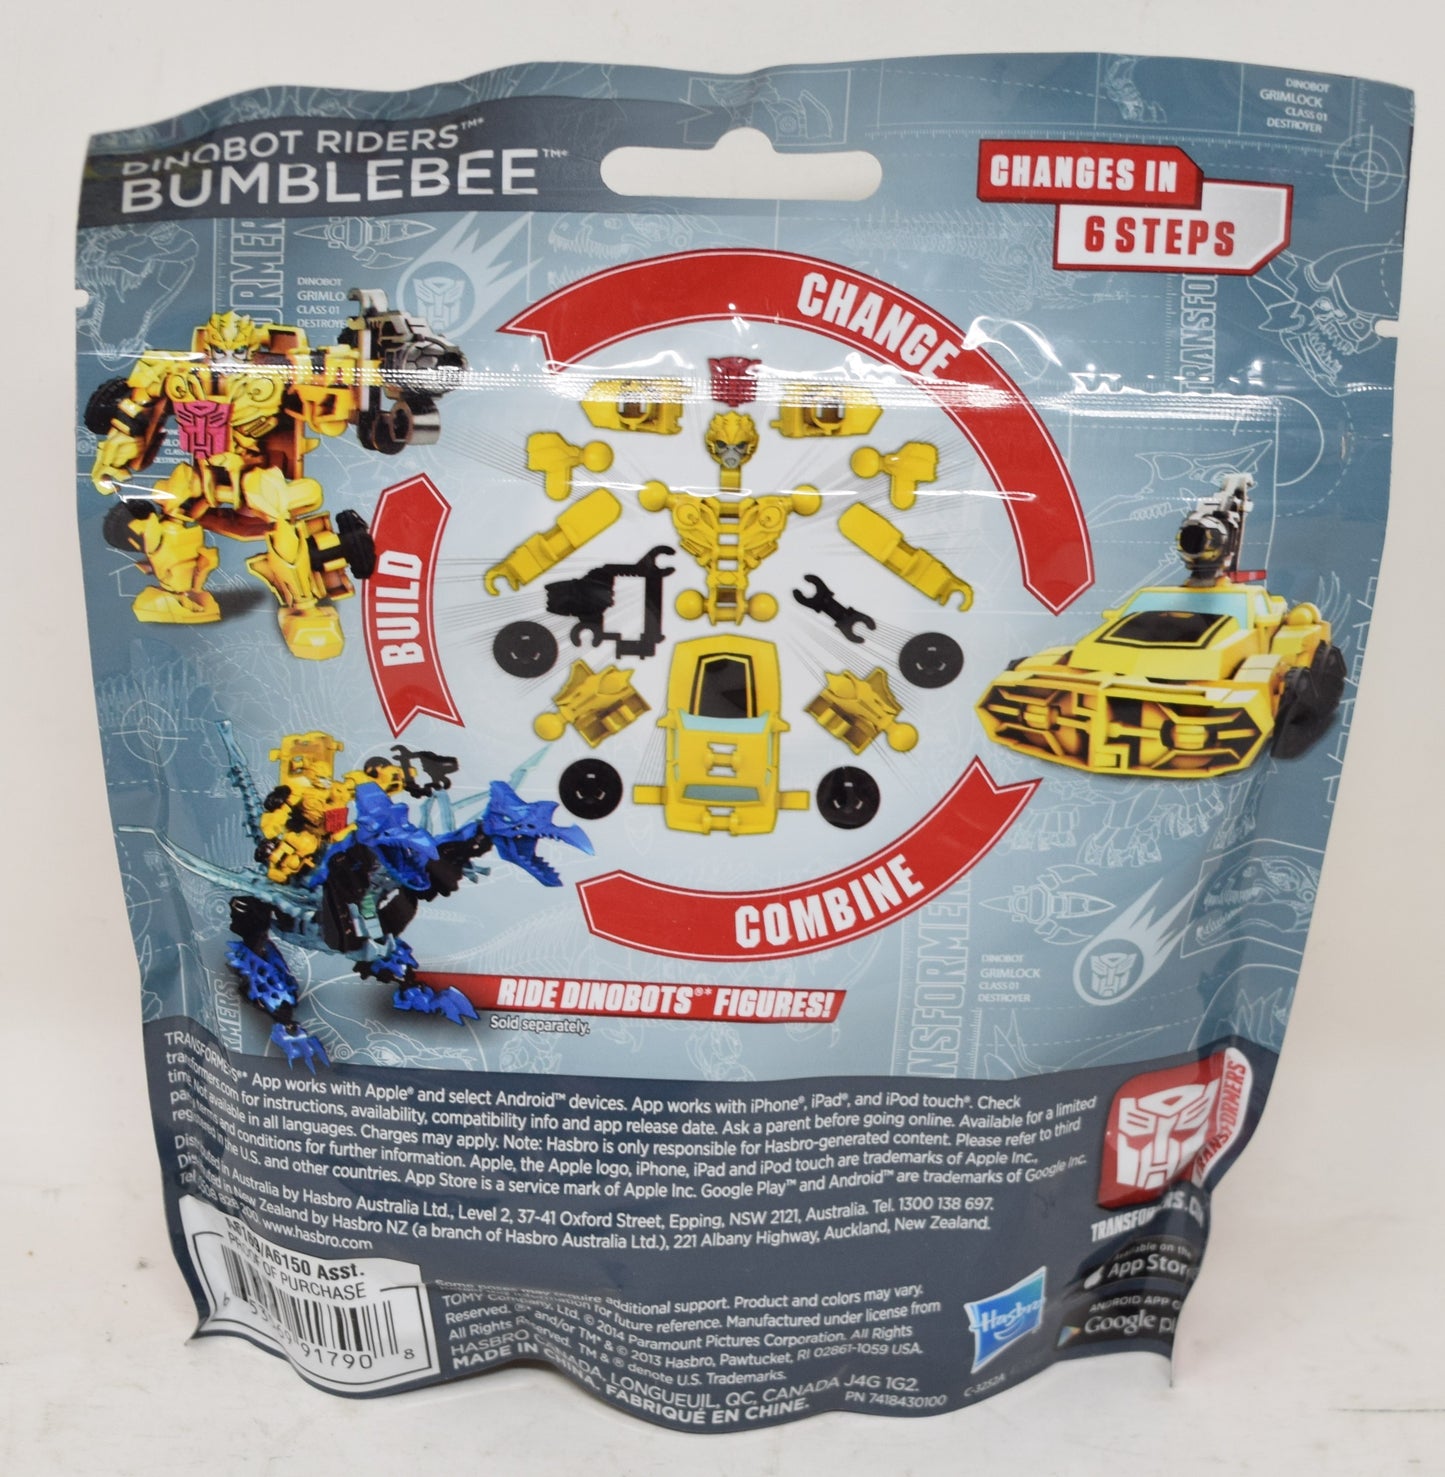 Transformers Construct Bots Bumblebee Dinobot Riders 18 piece MOC New